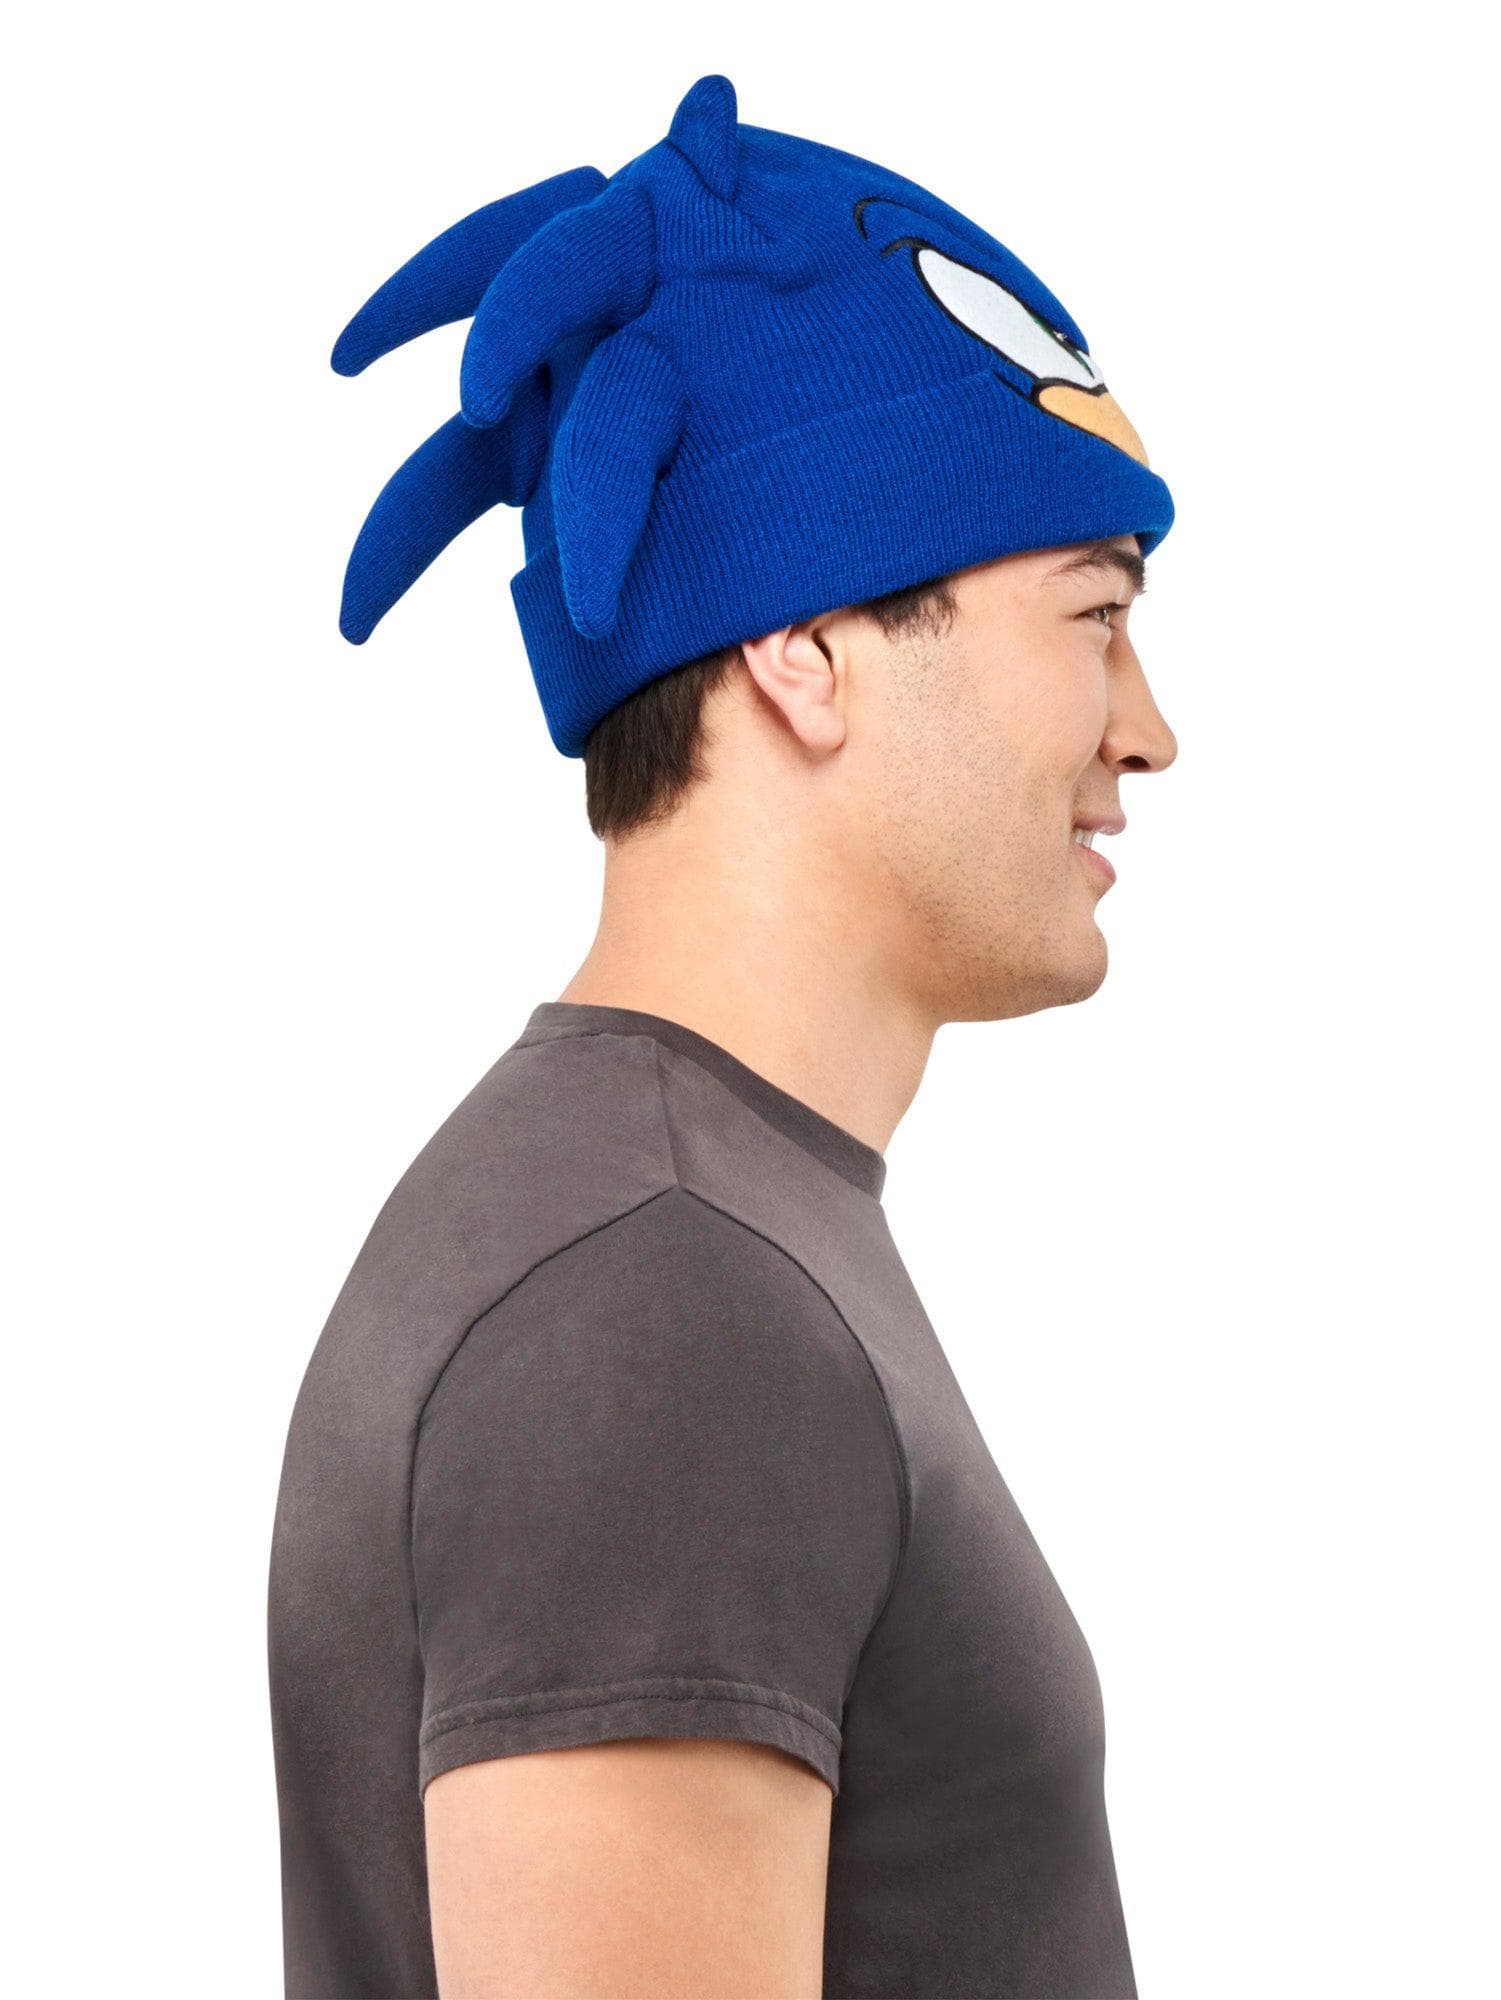 Adult Blue Knit Sonic Hat - costumes.com